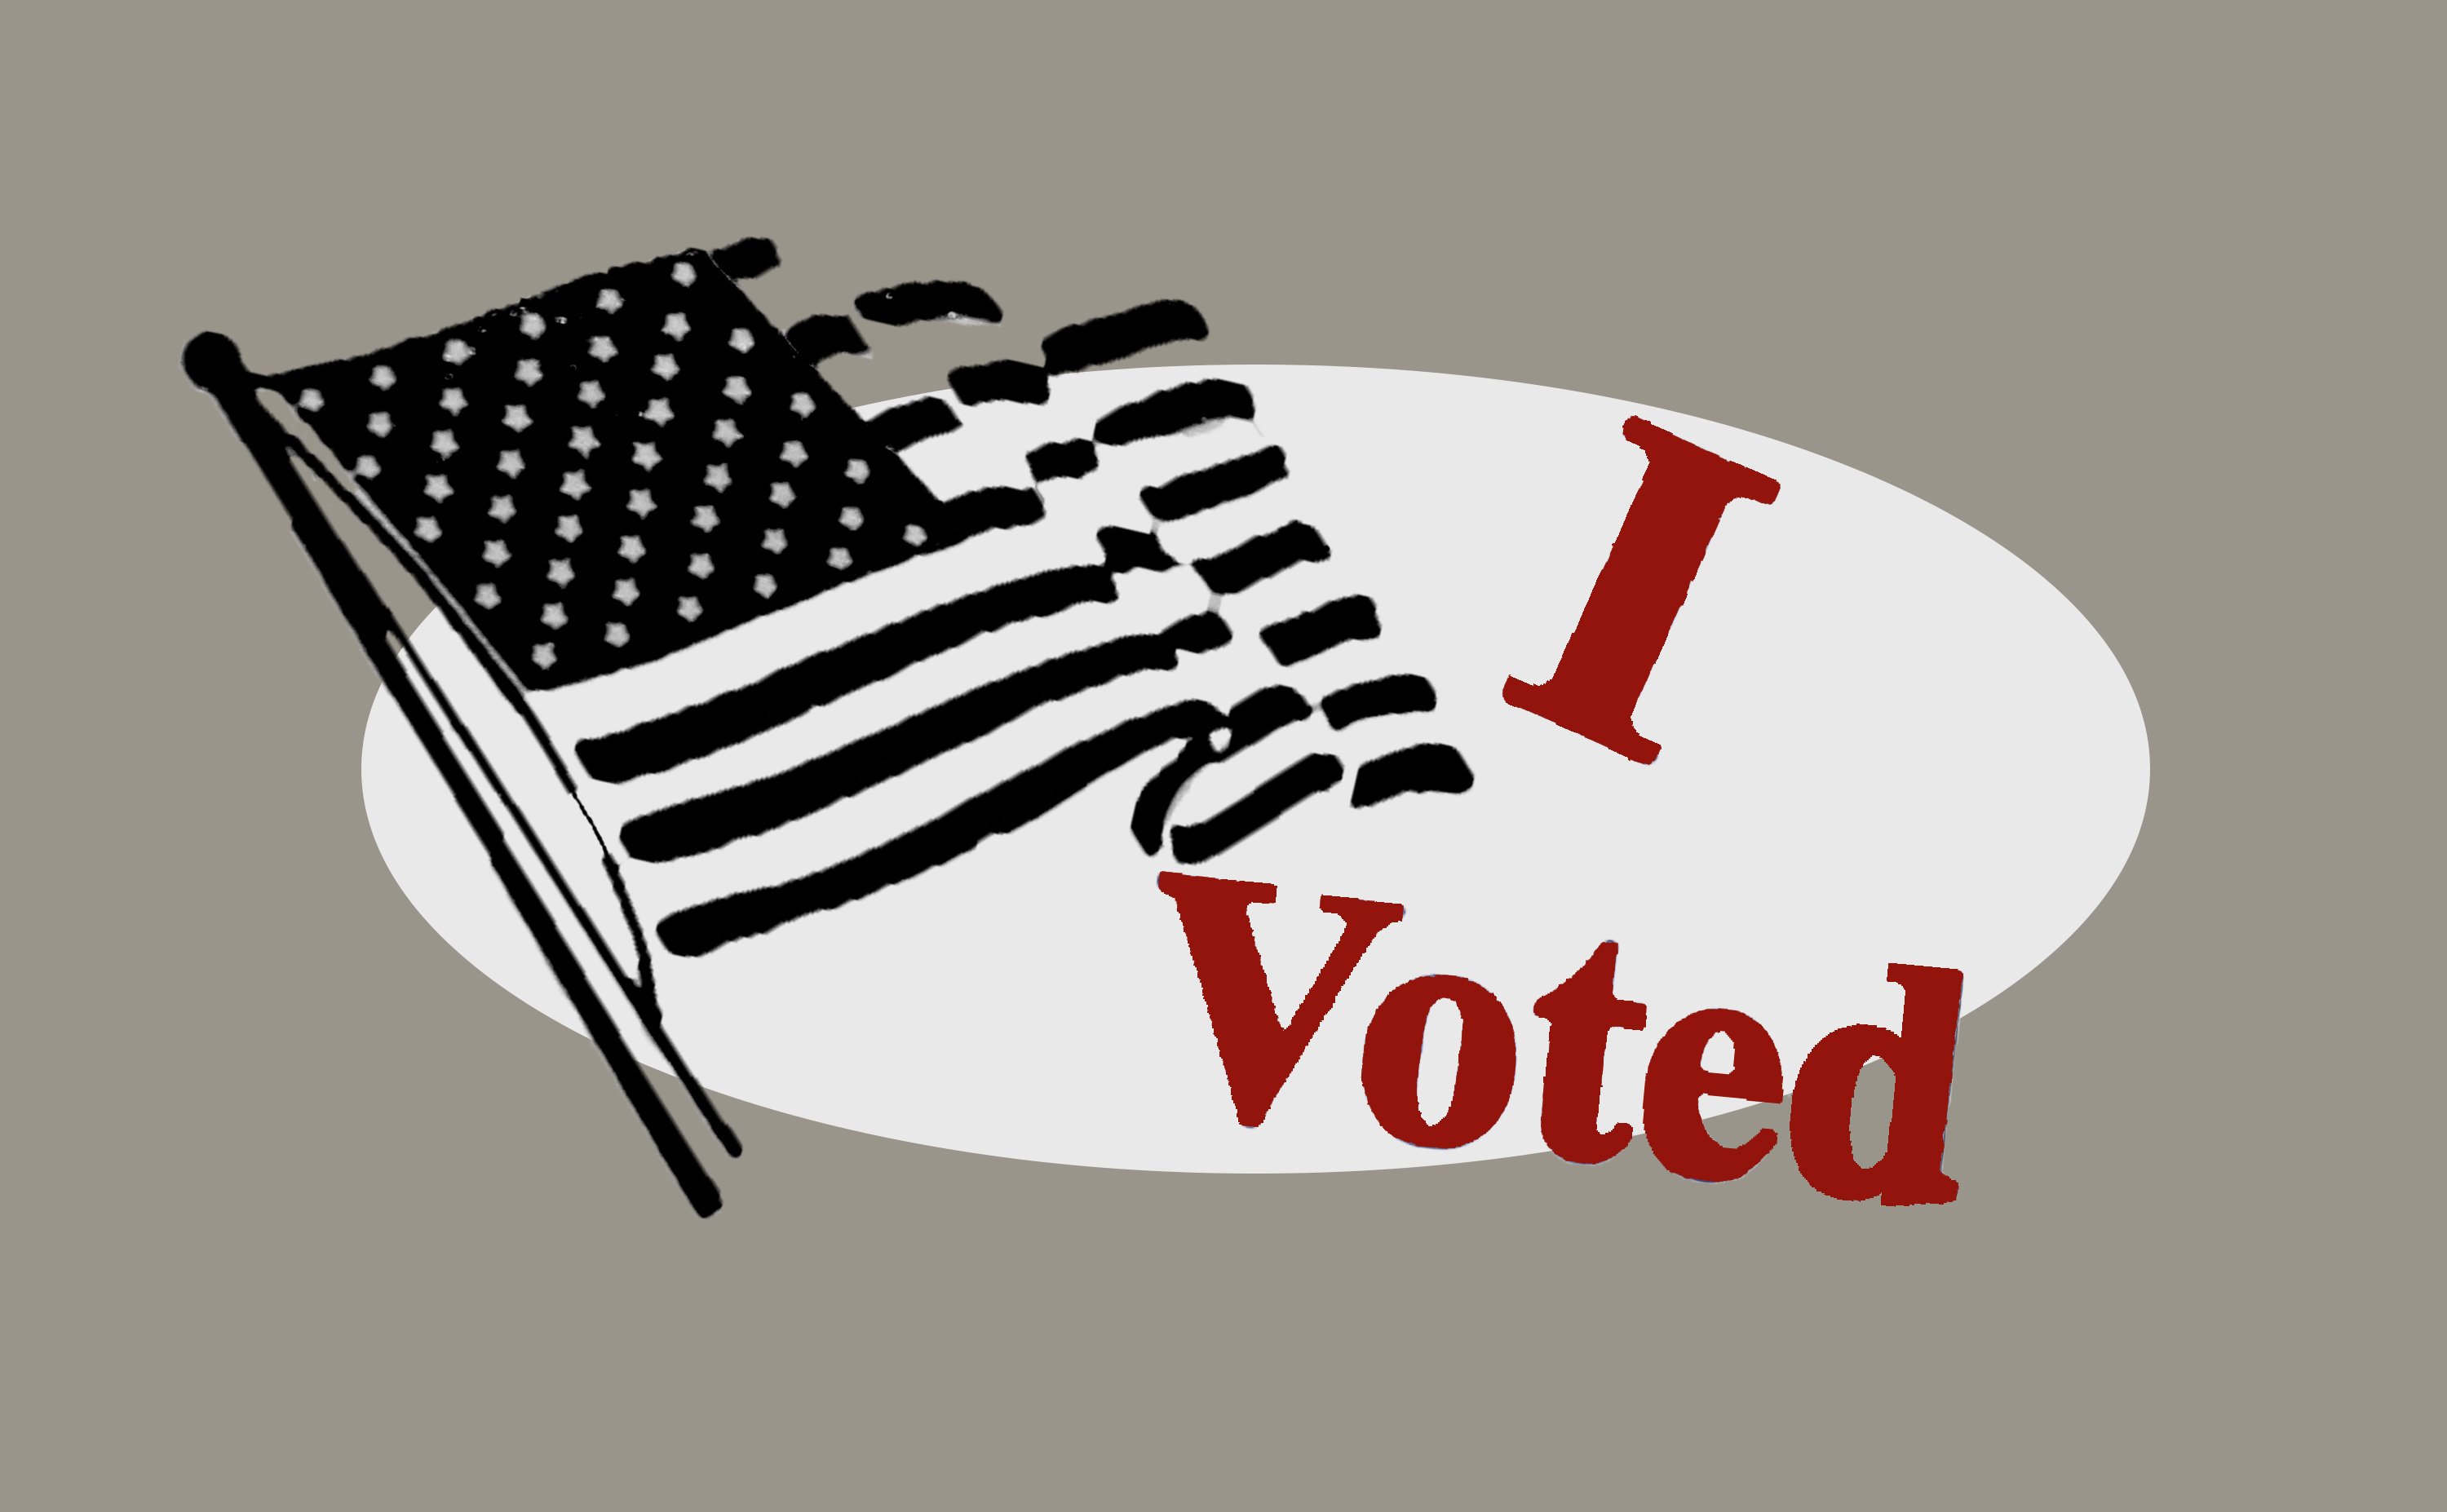 An "I voted" sticker.